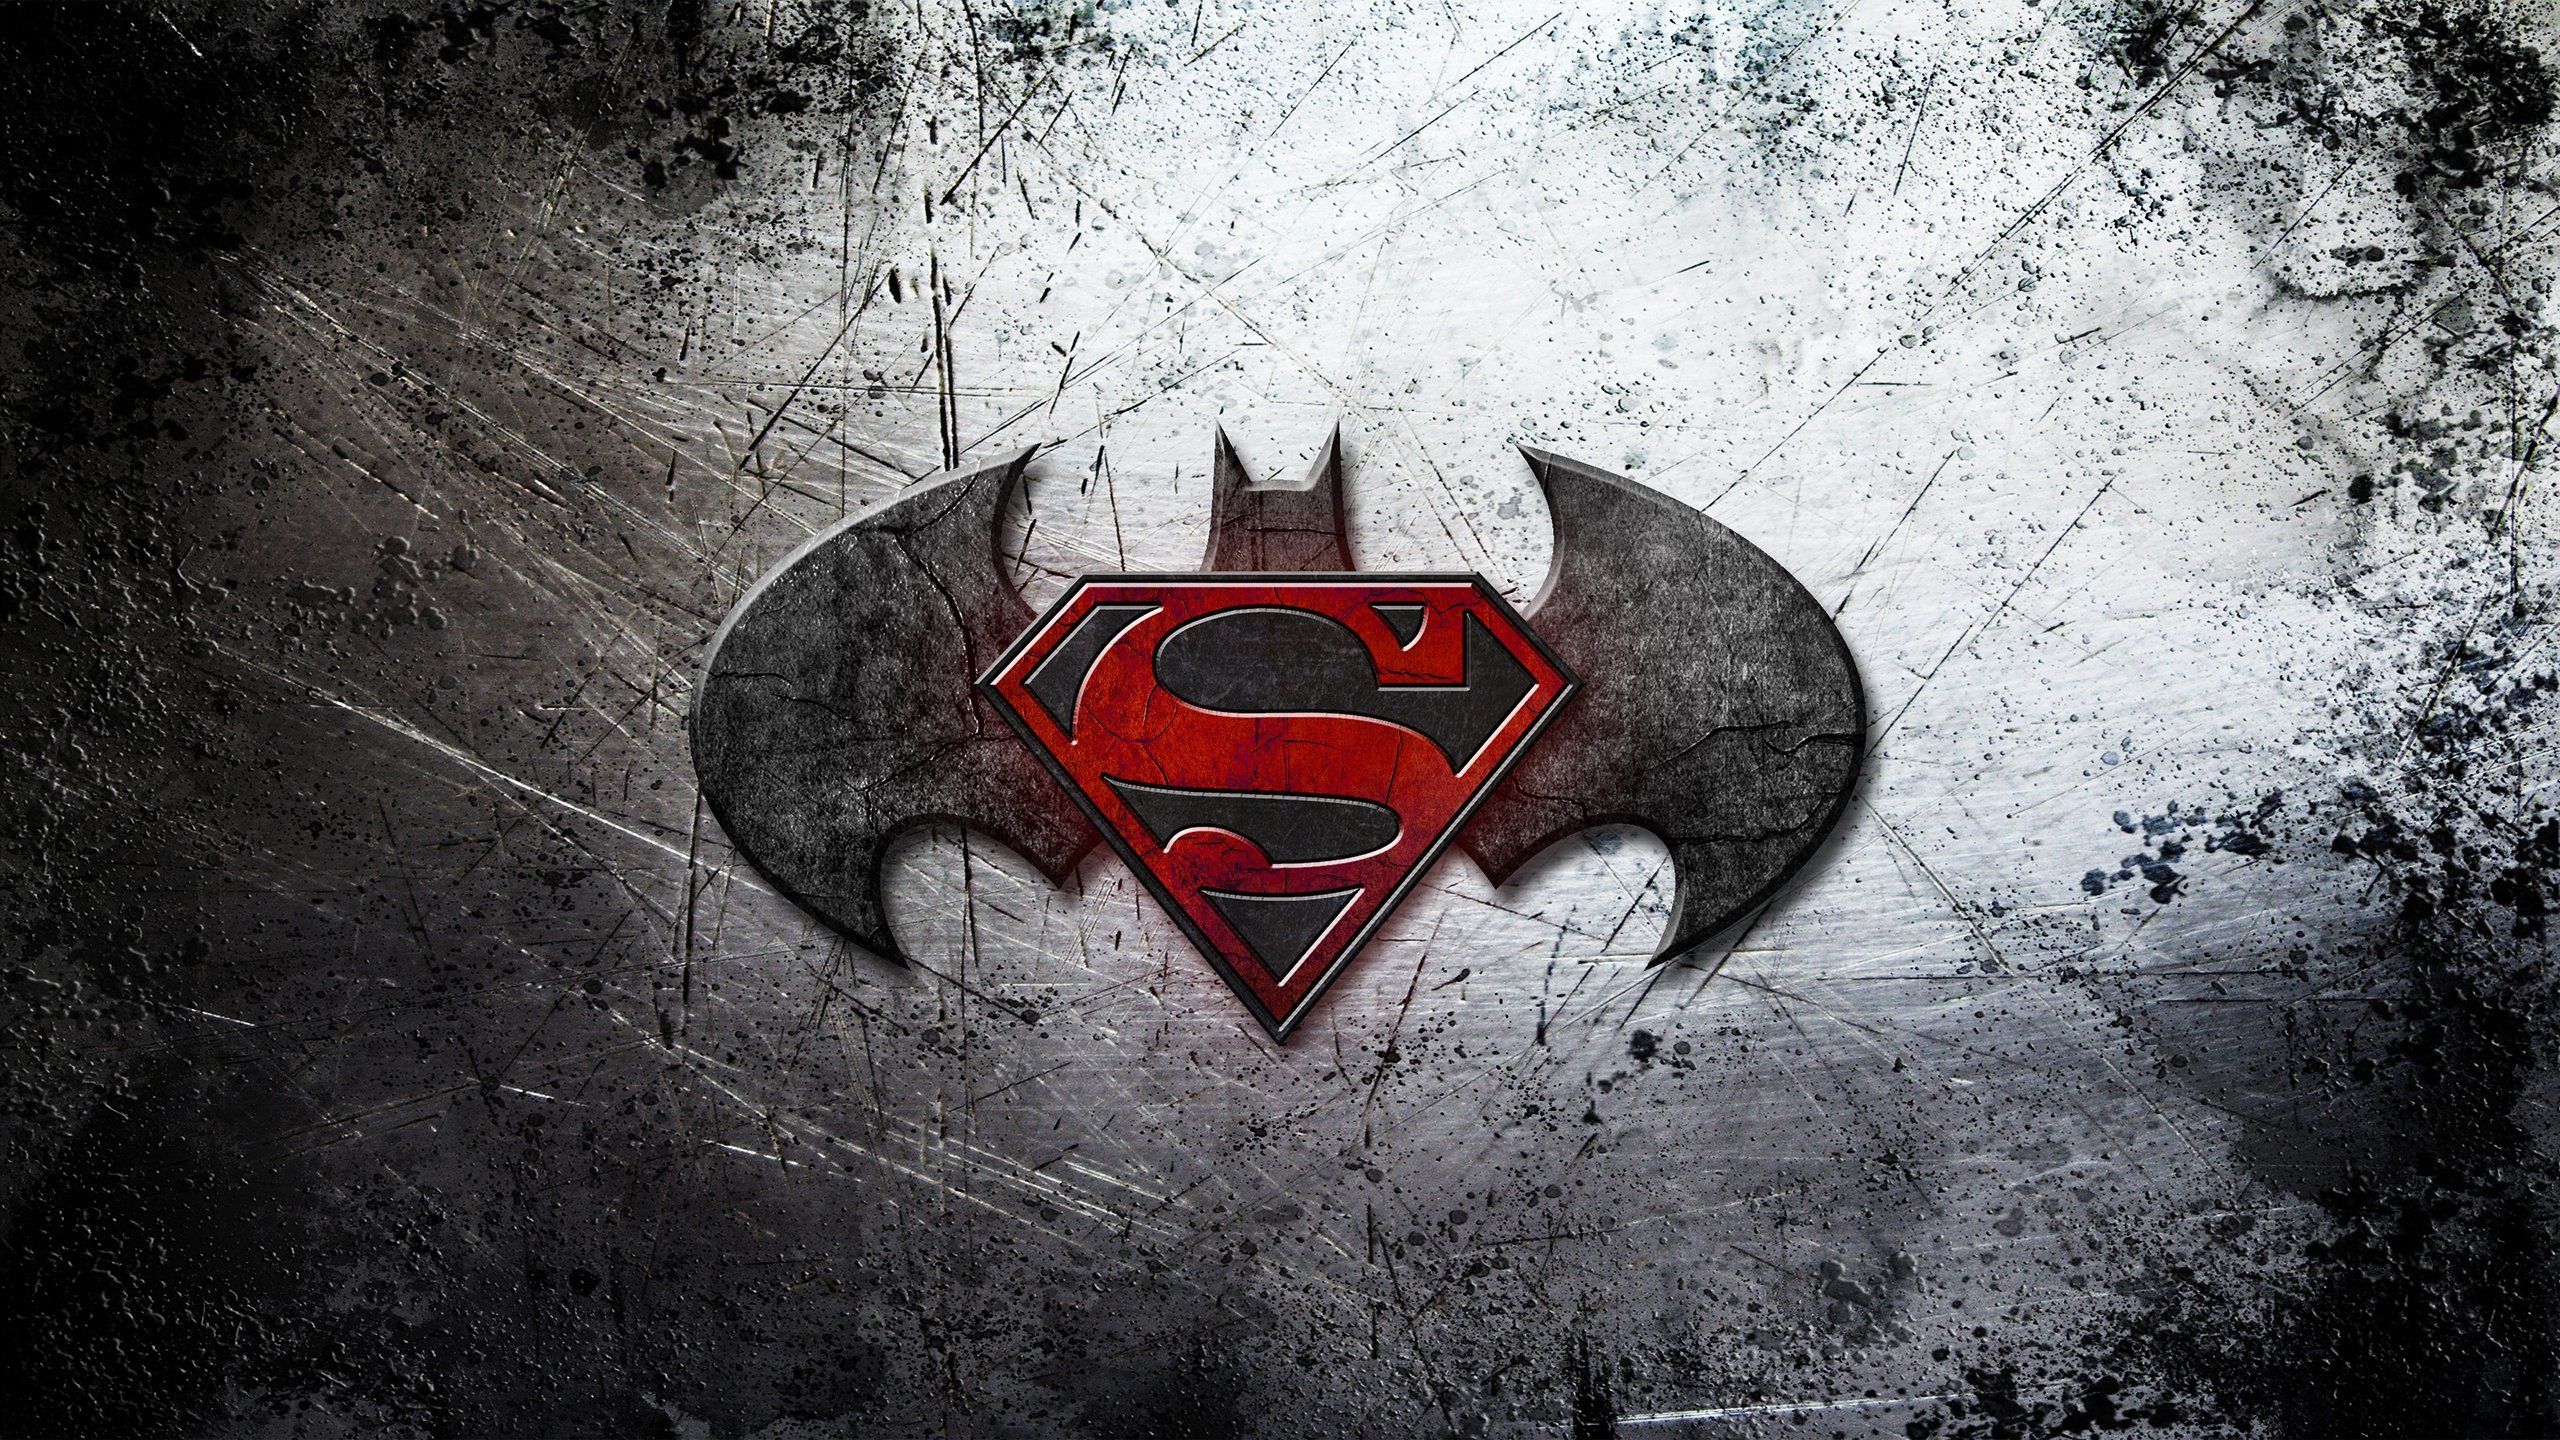 Free download Batman vs Superman Logo Wallpaper in High Resolution at Movies [2560x1440] for your Desktop, Mobile & Tablet. Explore Batman Superman Wallpaper. Dark Superman Wallpaper, Batman v Superman